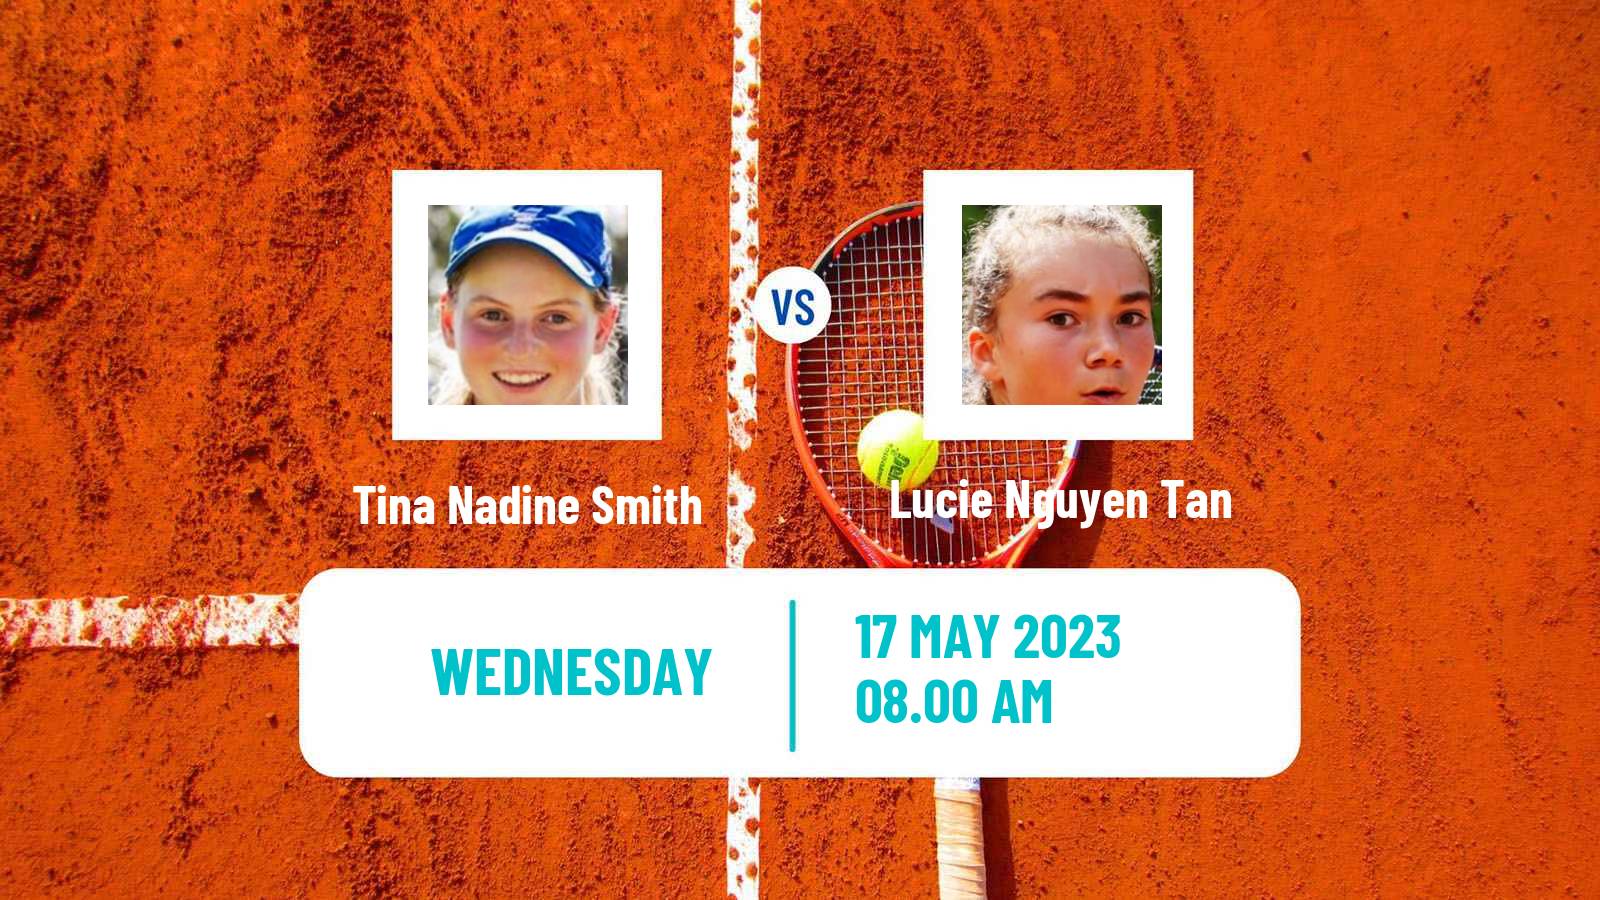 Tennis ITF W60 Saint Gaudens Women Tina Nadine Smith - Lucie Nguyen Tan